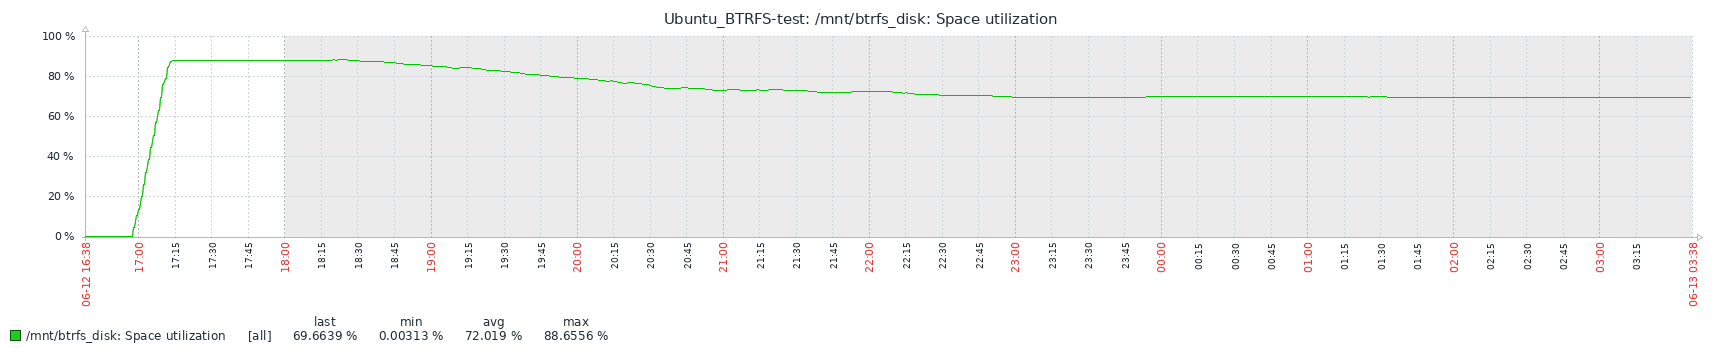 2.7.5 BTRFS Space utilization full